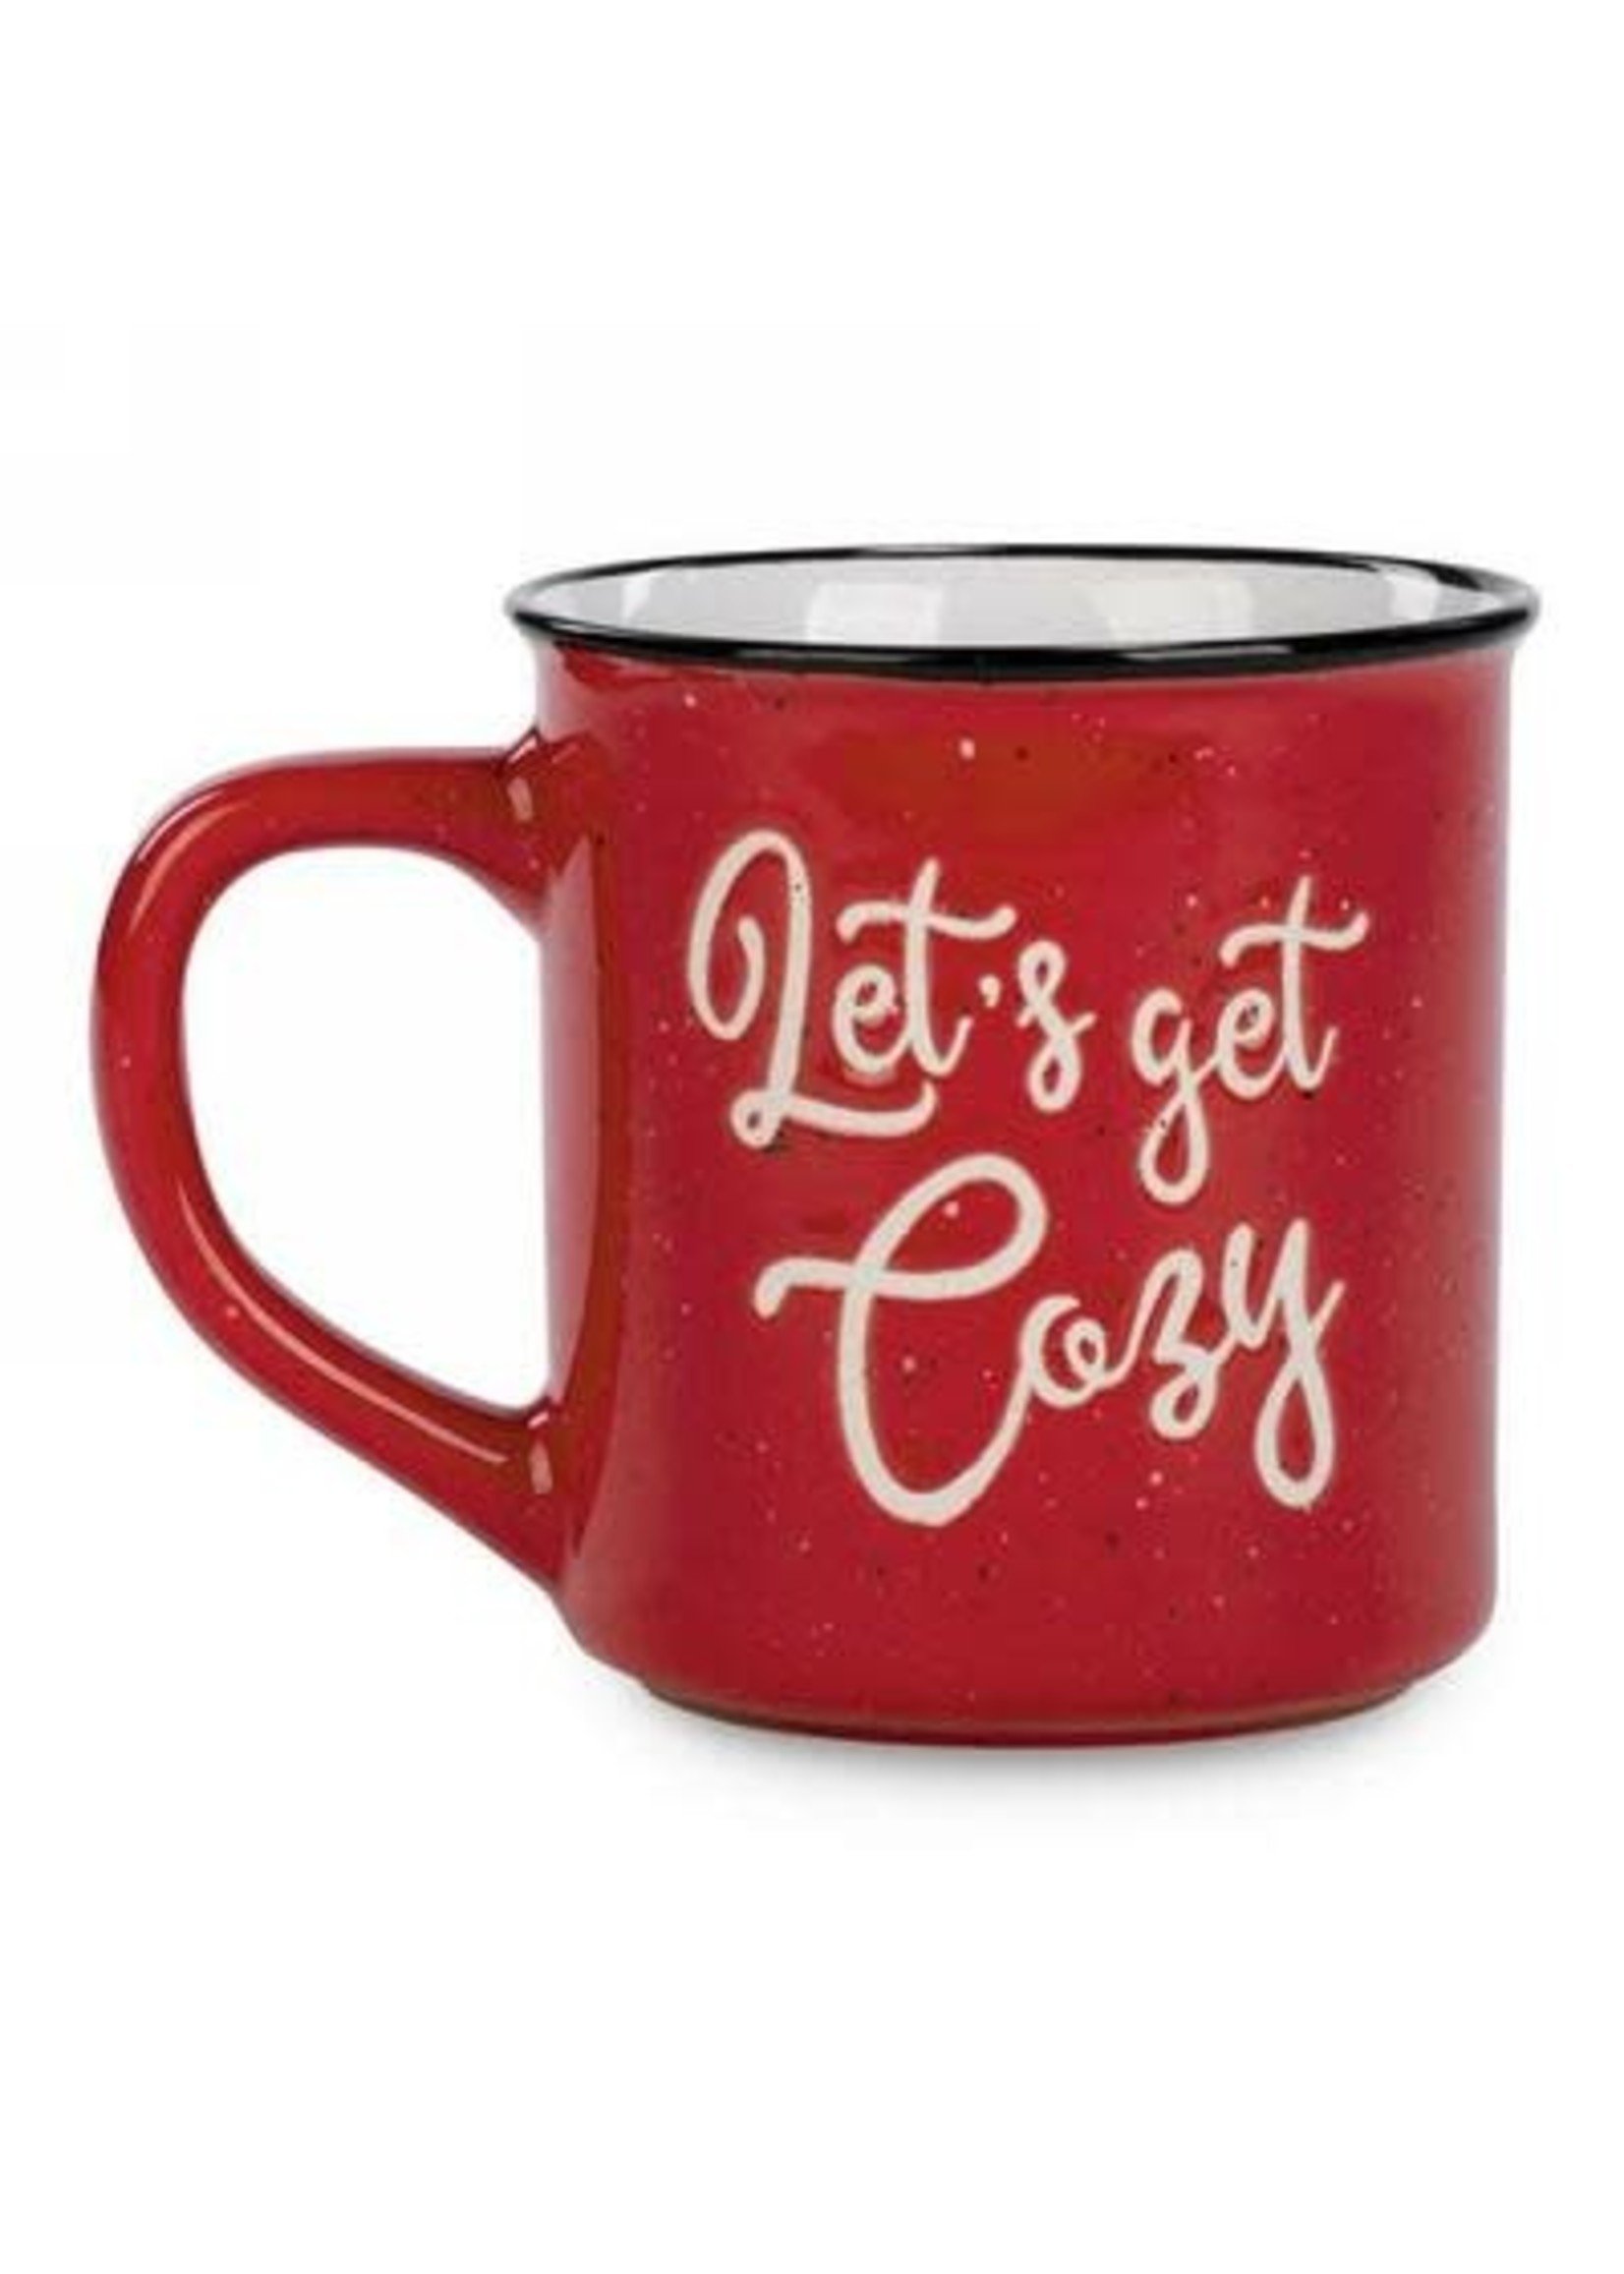 Apex Elegance Ceramic Mug " Let's get Cozy"